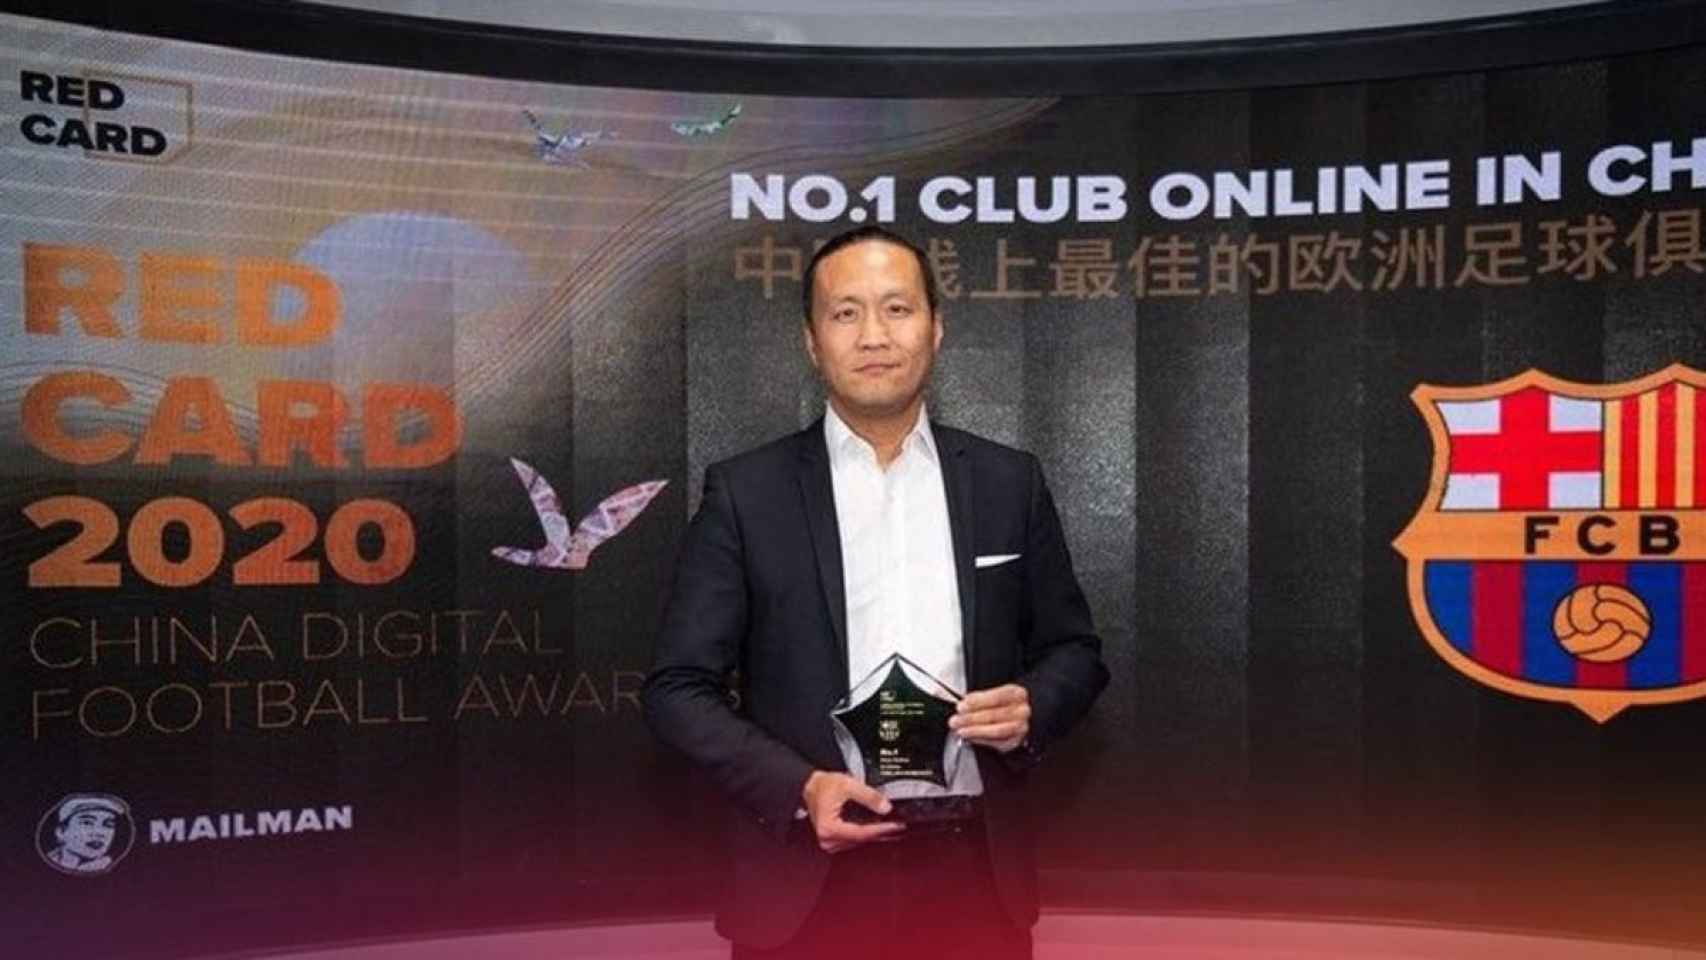 El Barça, mejor club online en China | FCB